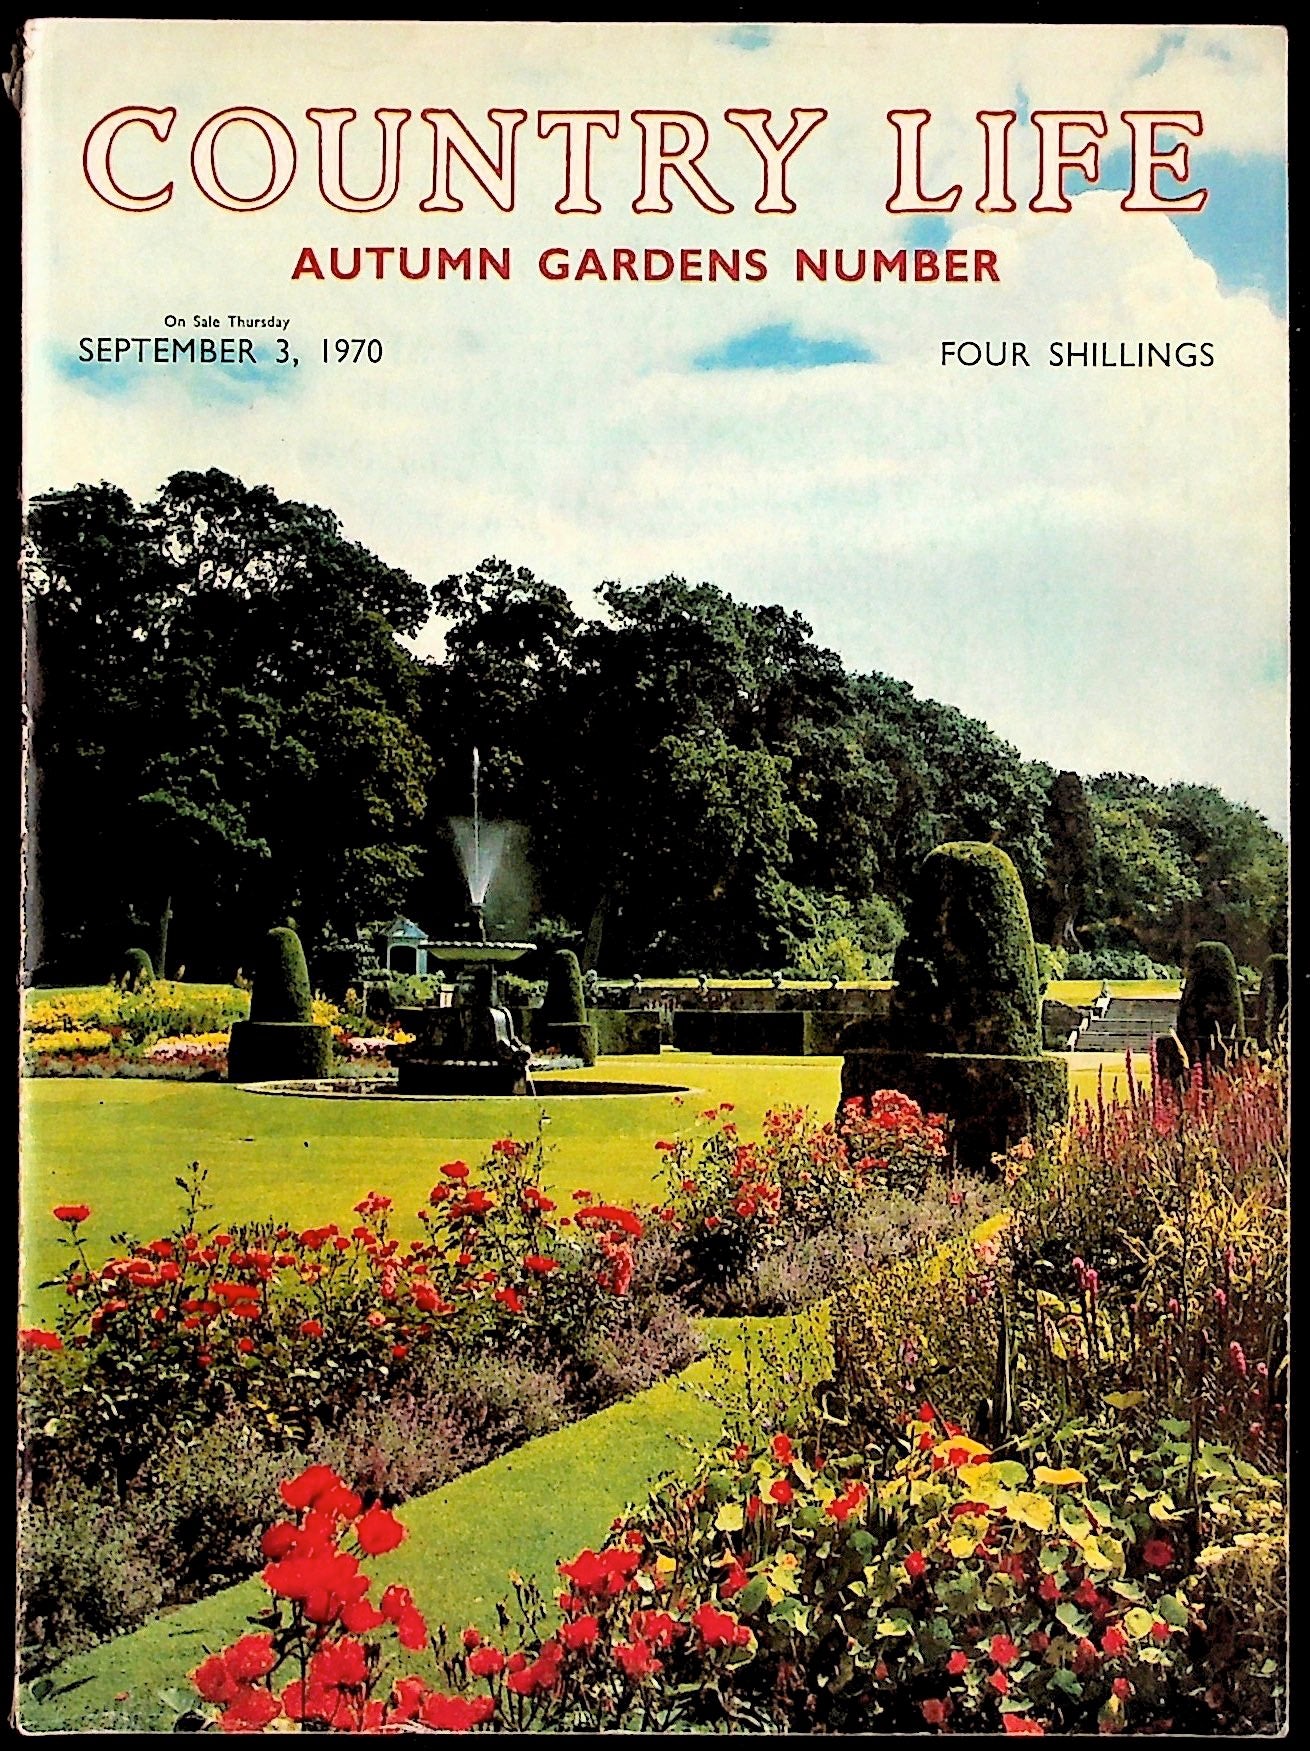 Country Life. September 3, 1970. Vol. CXLVIII No. 3828 Autumn